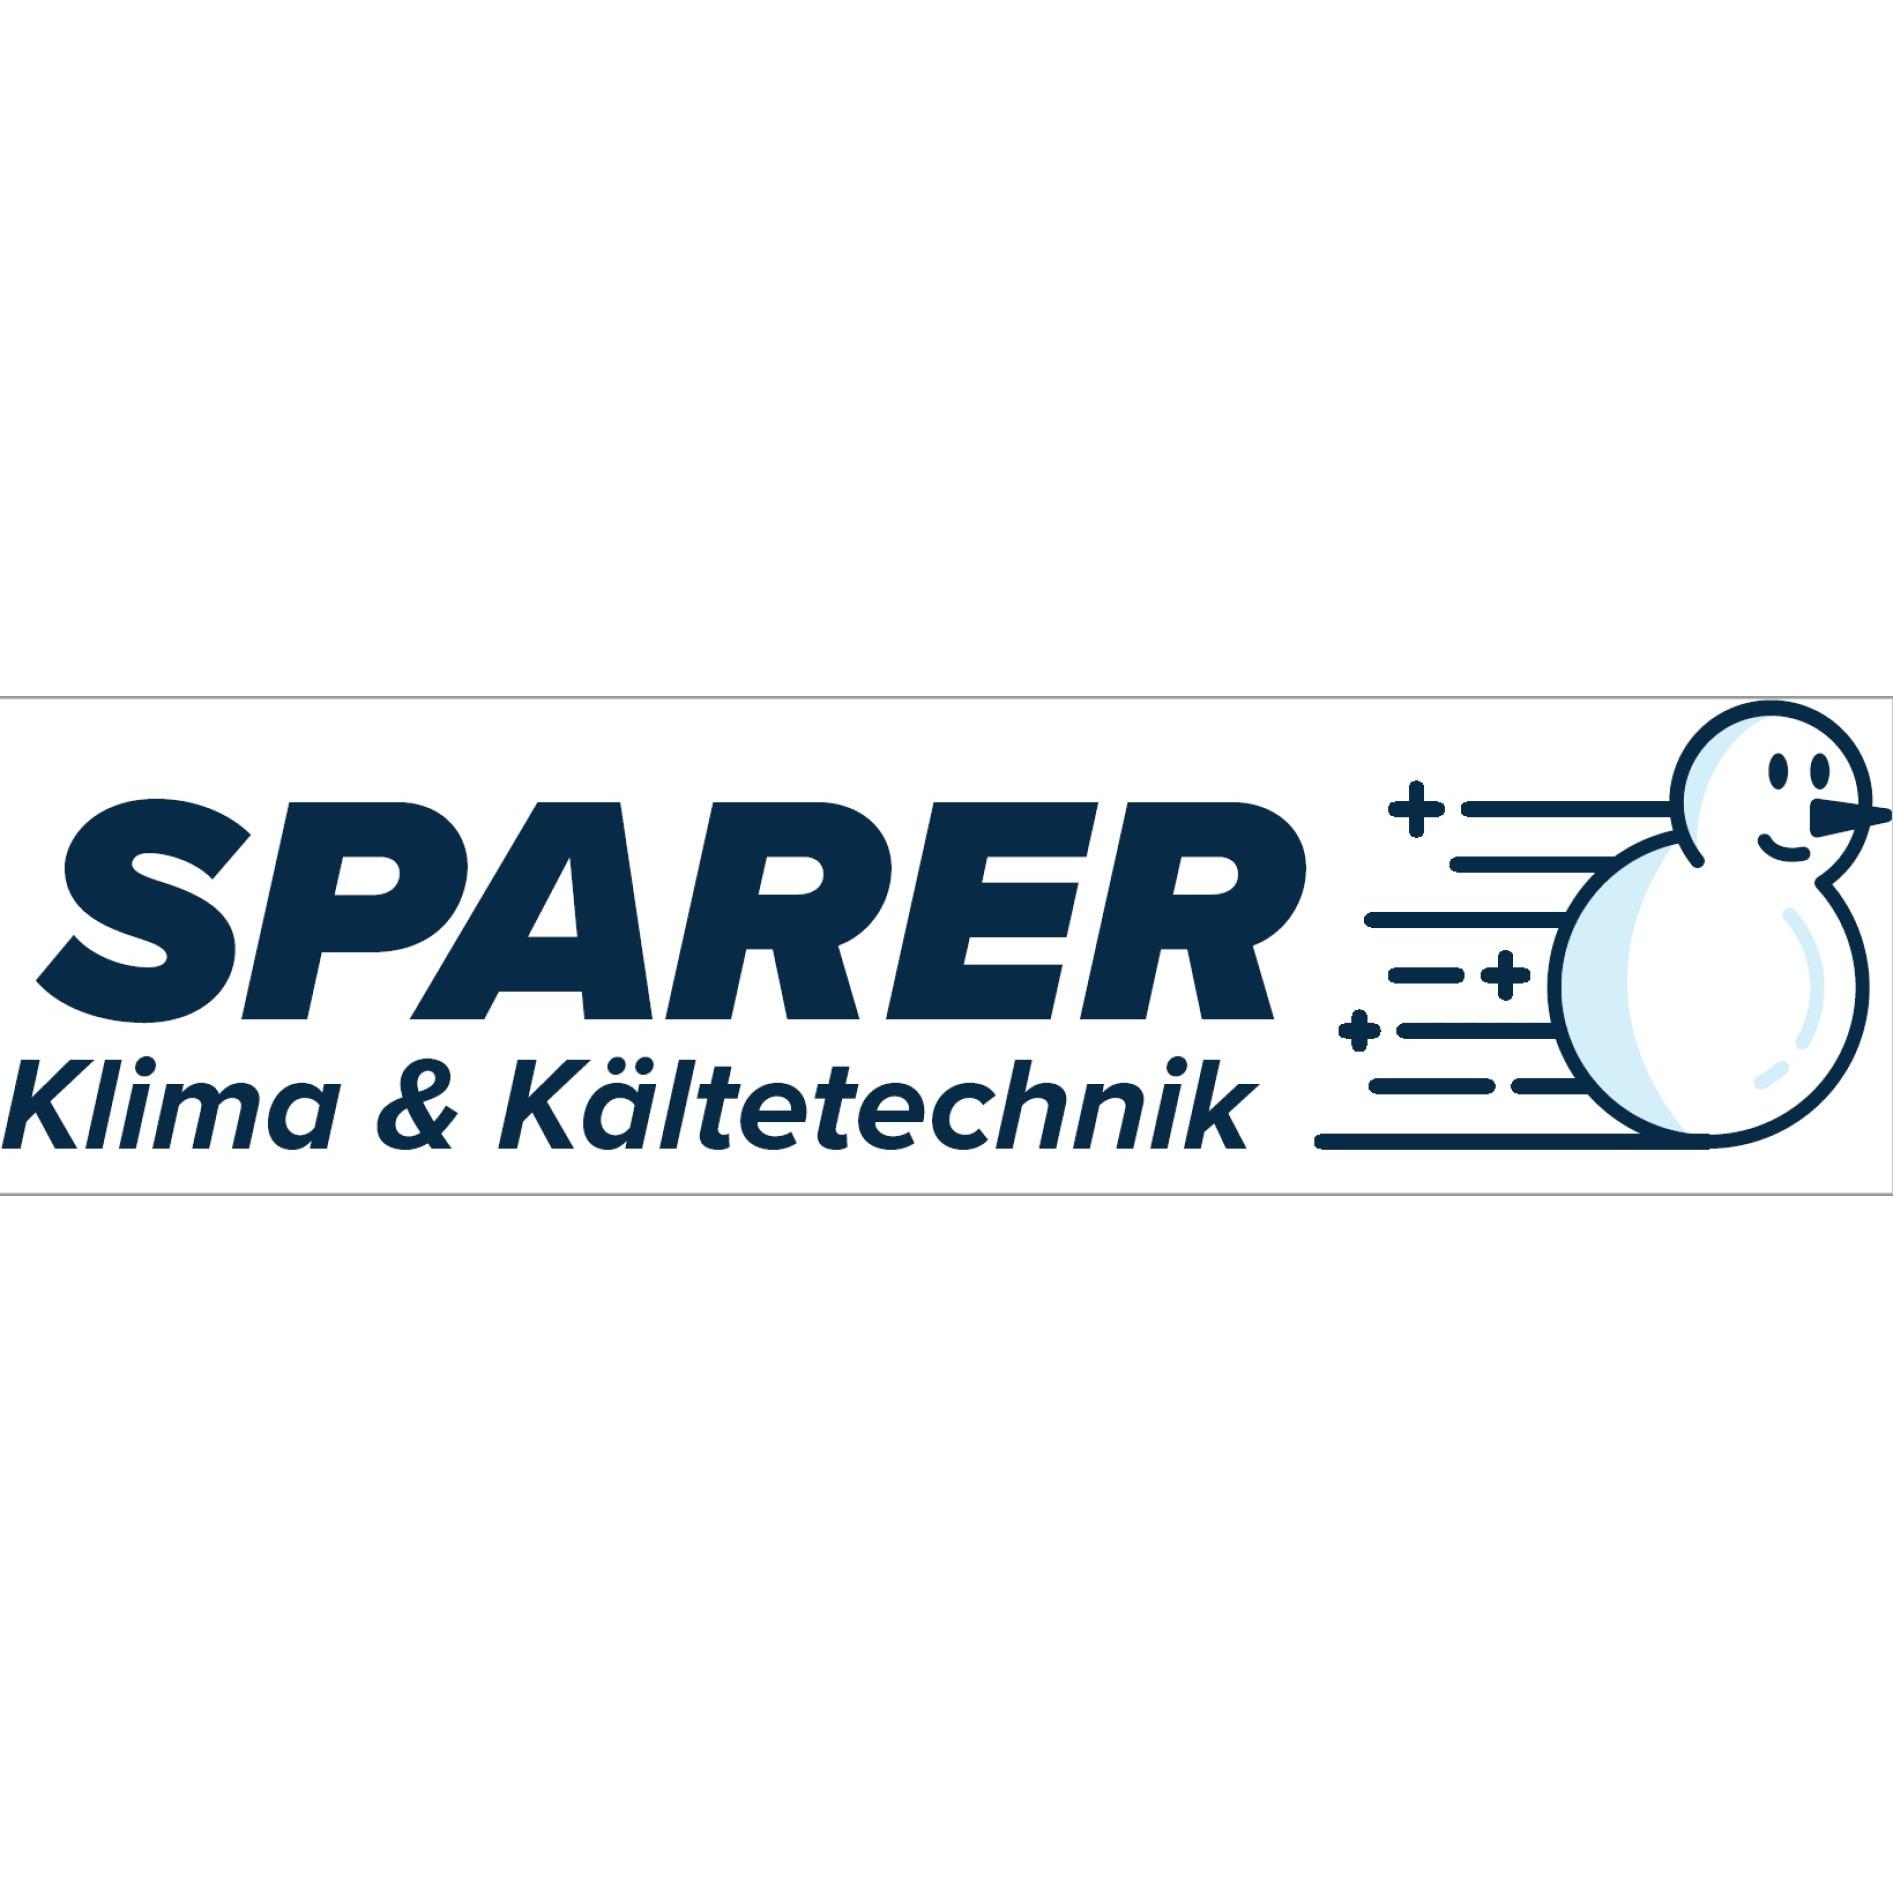 Edmund Sparer Klima & Kältetechnik Logo